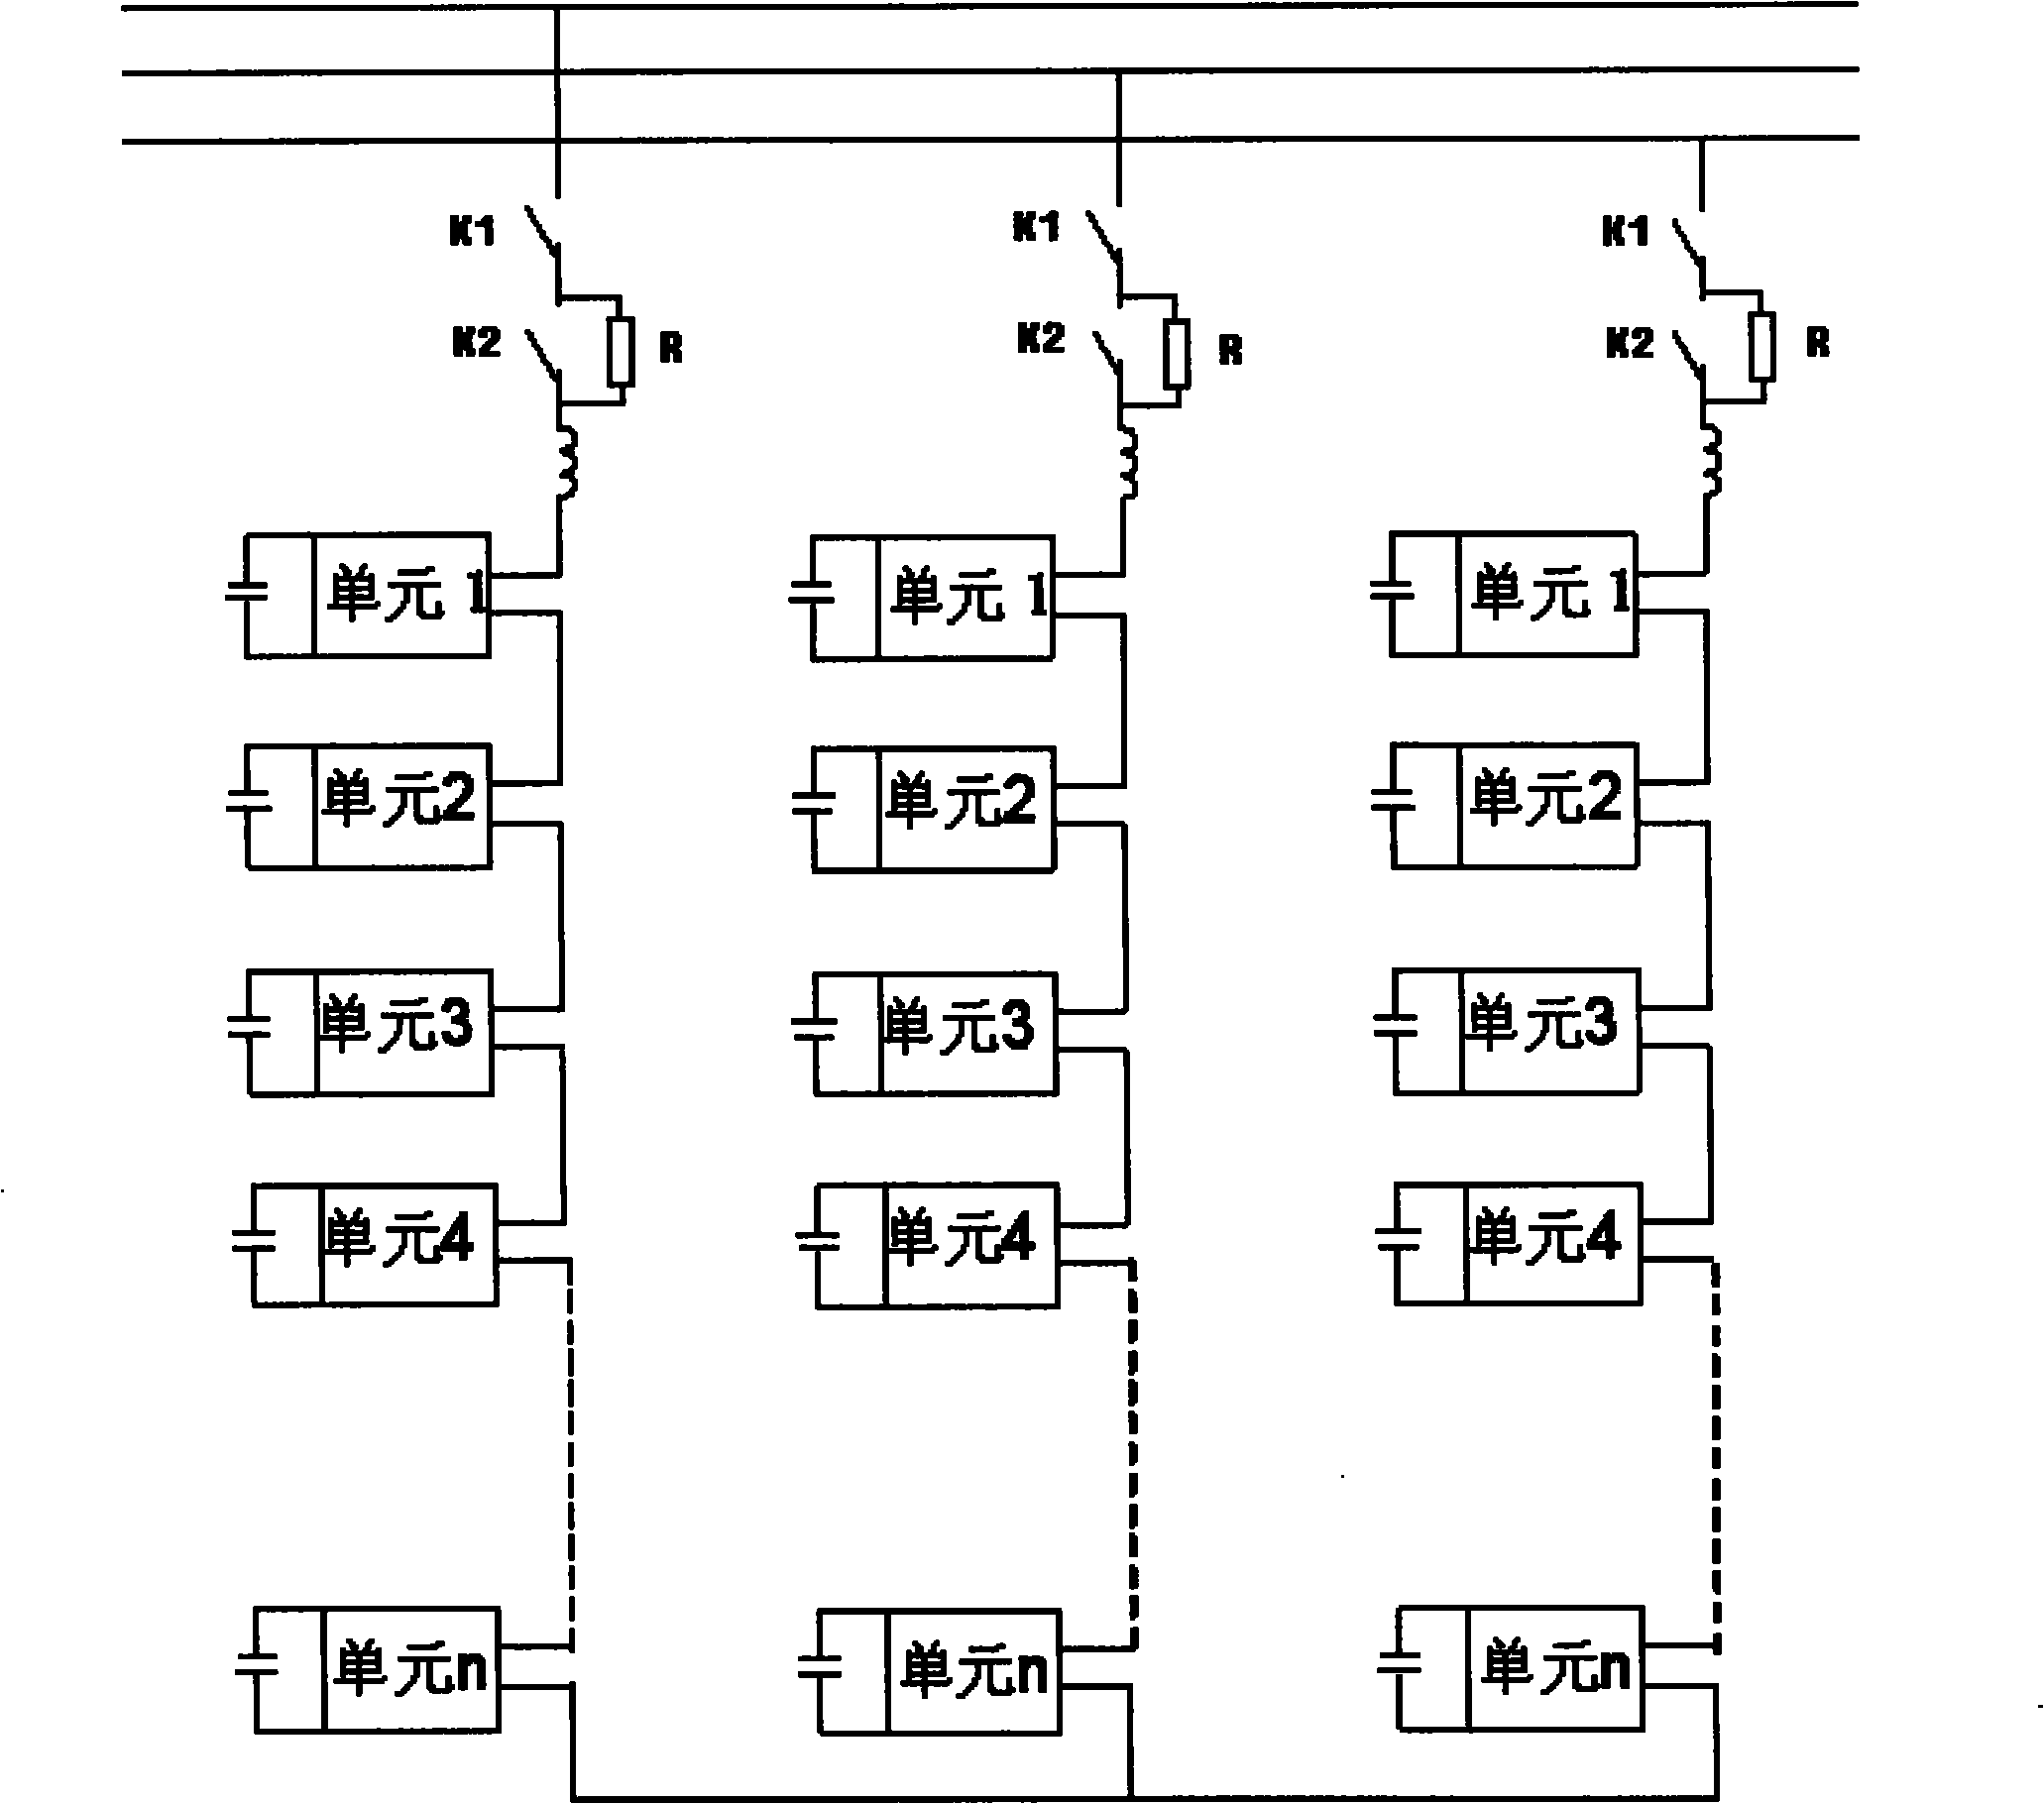 Transformerless STATCOM (Static Compensator) topological structure based on MMC (Modular Multilevel Converter)